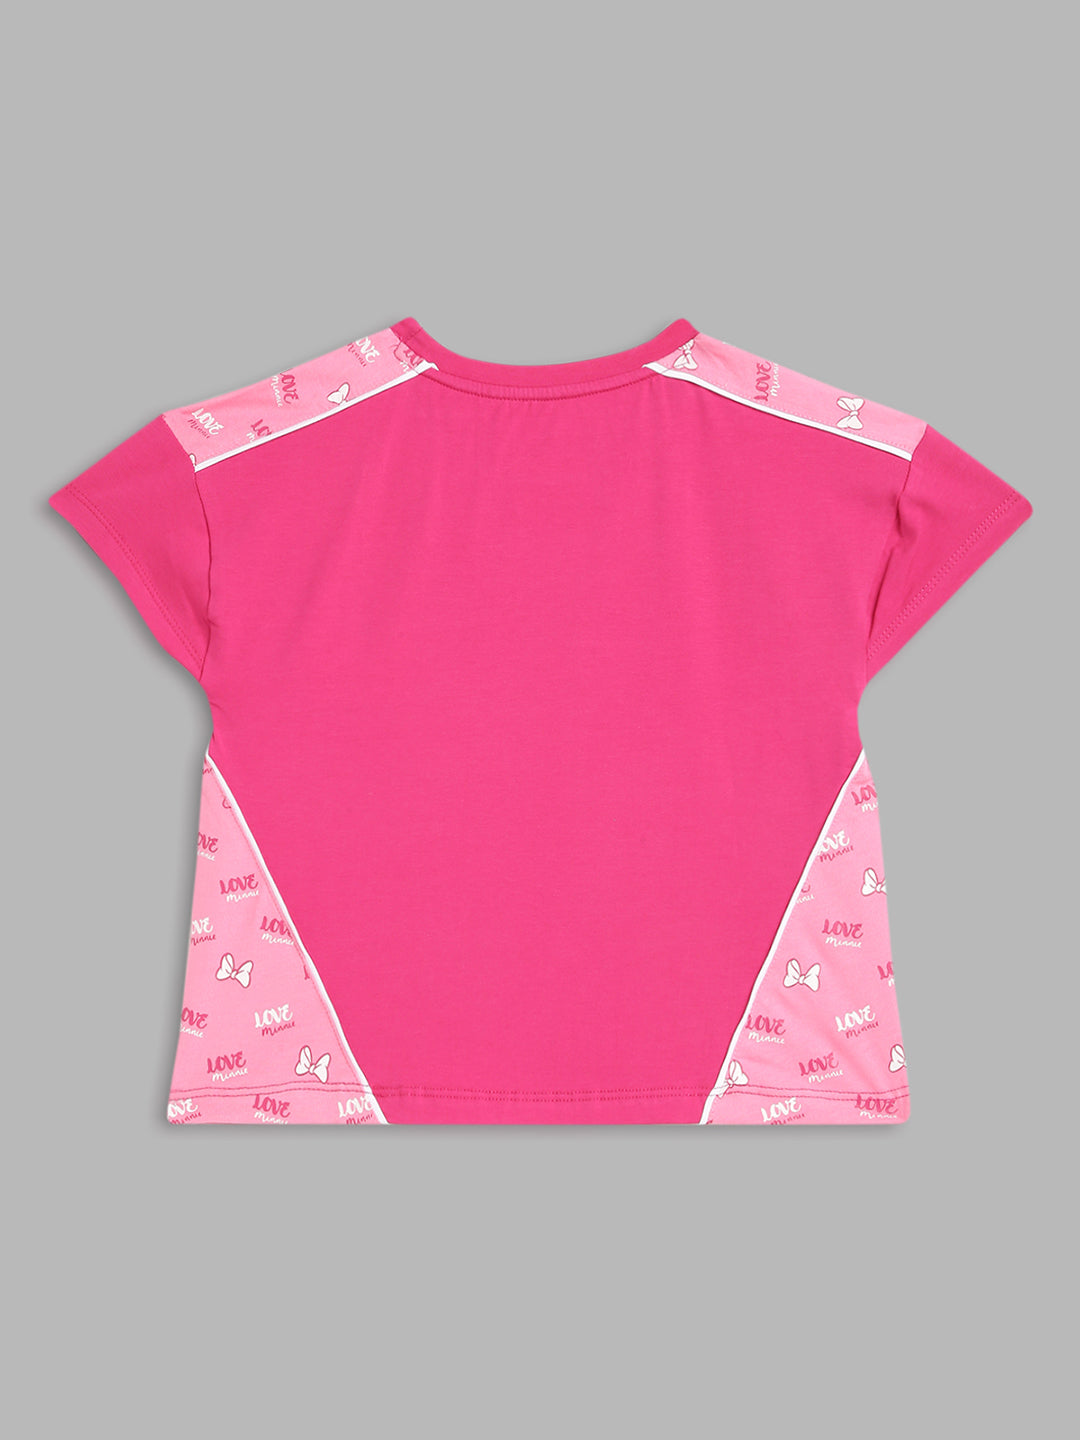 Blue Giraffe Girls Pink Printed Round Neck TShirt